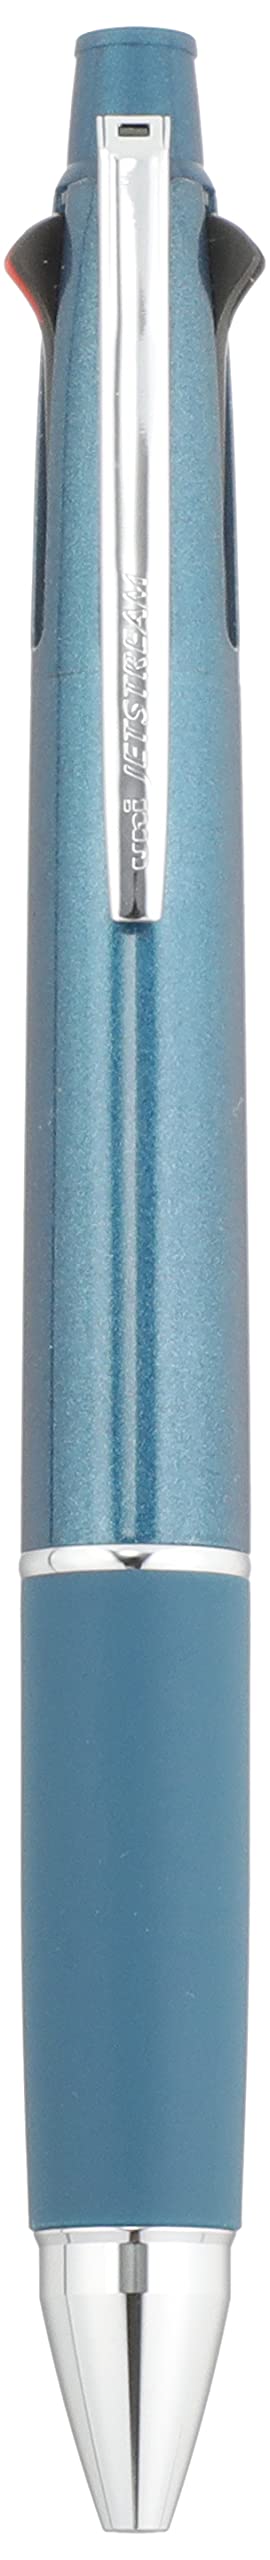  [AUSTRALIA] - uni Jetstream Multi Pen 4 and 1, 0.5mm Ballpoint Pen (Black, Red, Blue, Green) and 0.5mm Mechanical Pencil, Teal Blue (MSXE5100005.39)